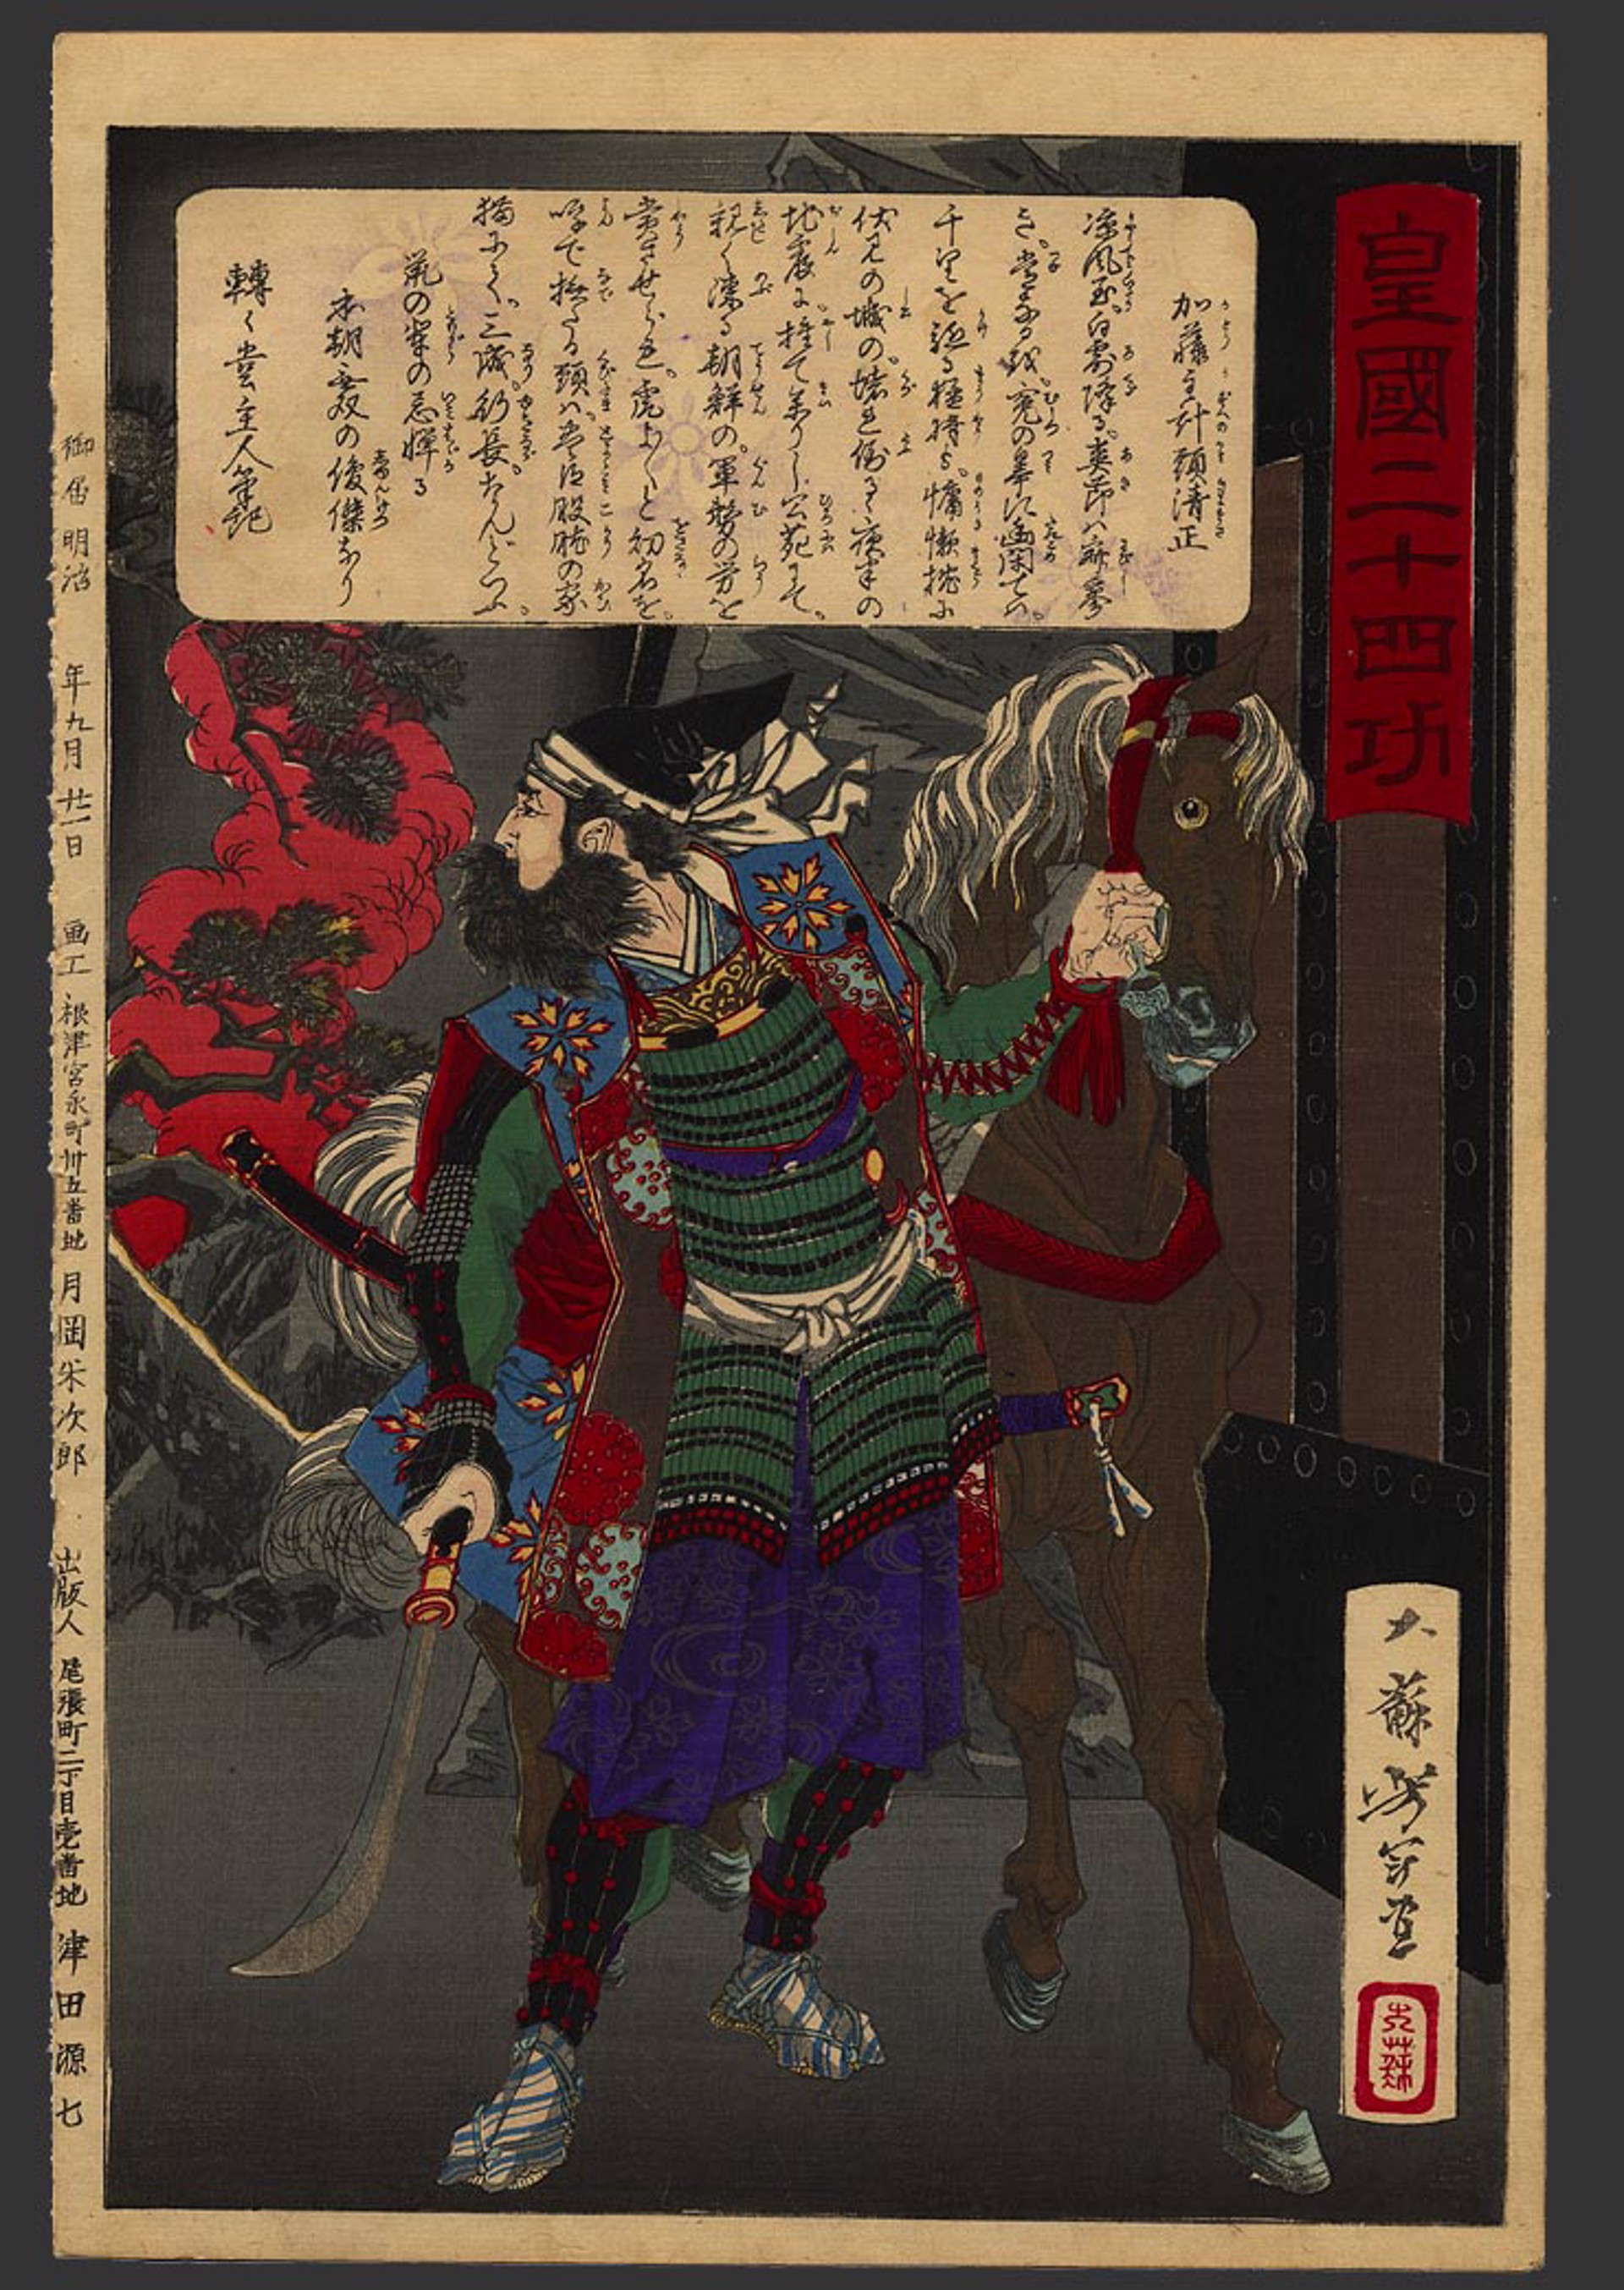 #9 Kato (kazuenokami) Kiyomasa at the fall of Fushimi Castle. 24 Accomplishments in Imperial Japan by Yoshitoshi